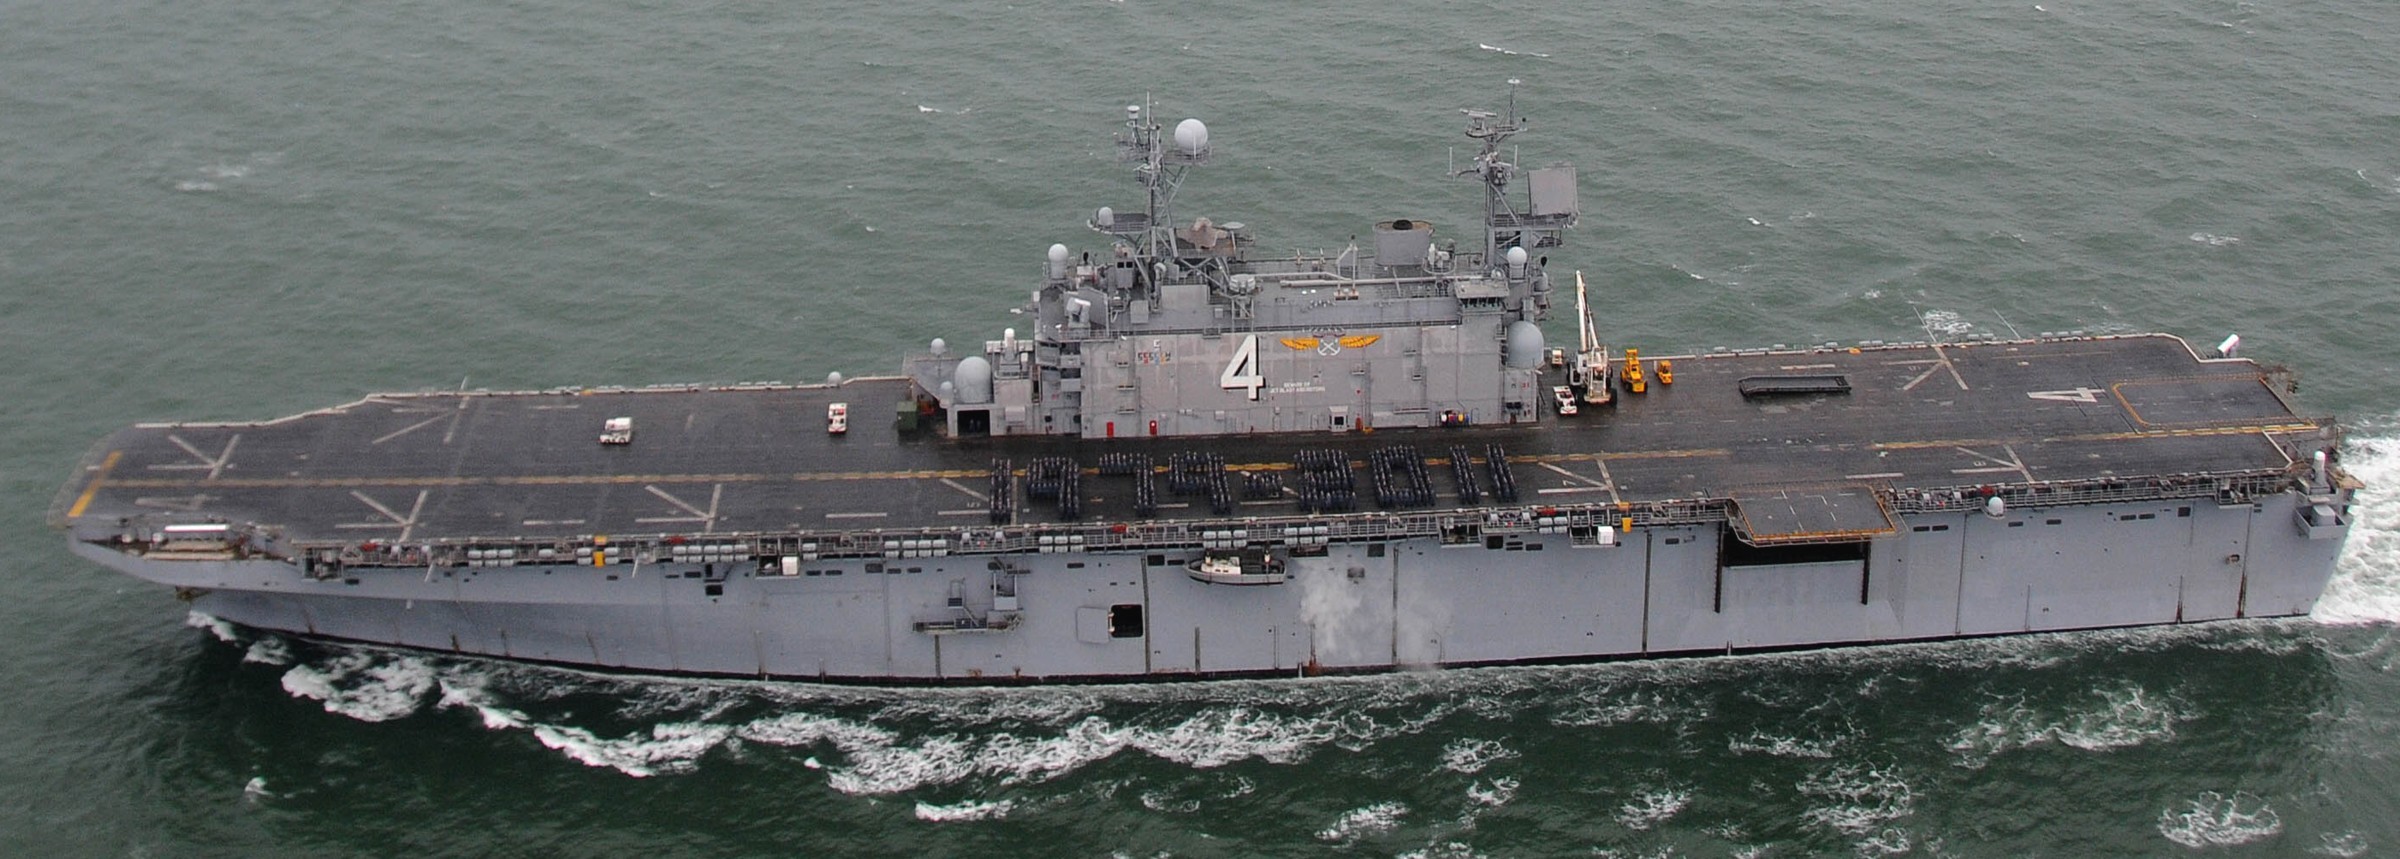 lha-4 uss nassau tarawa class amphibious assault ship us navy 63